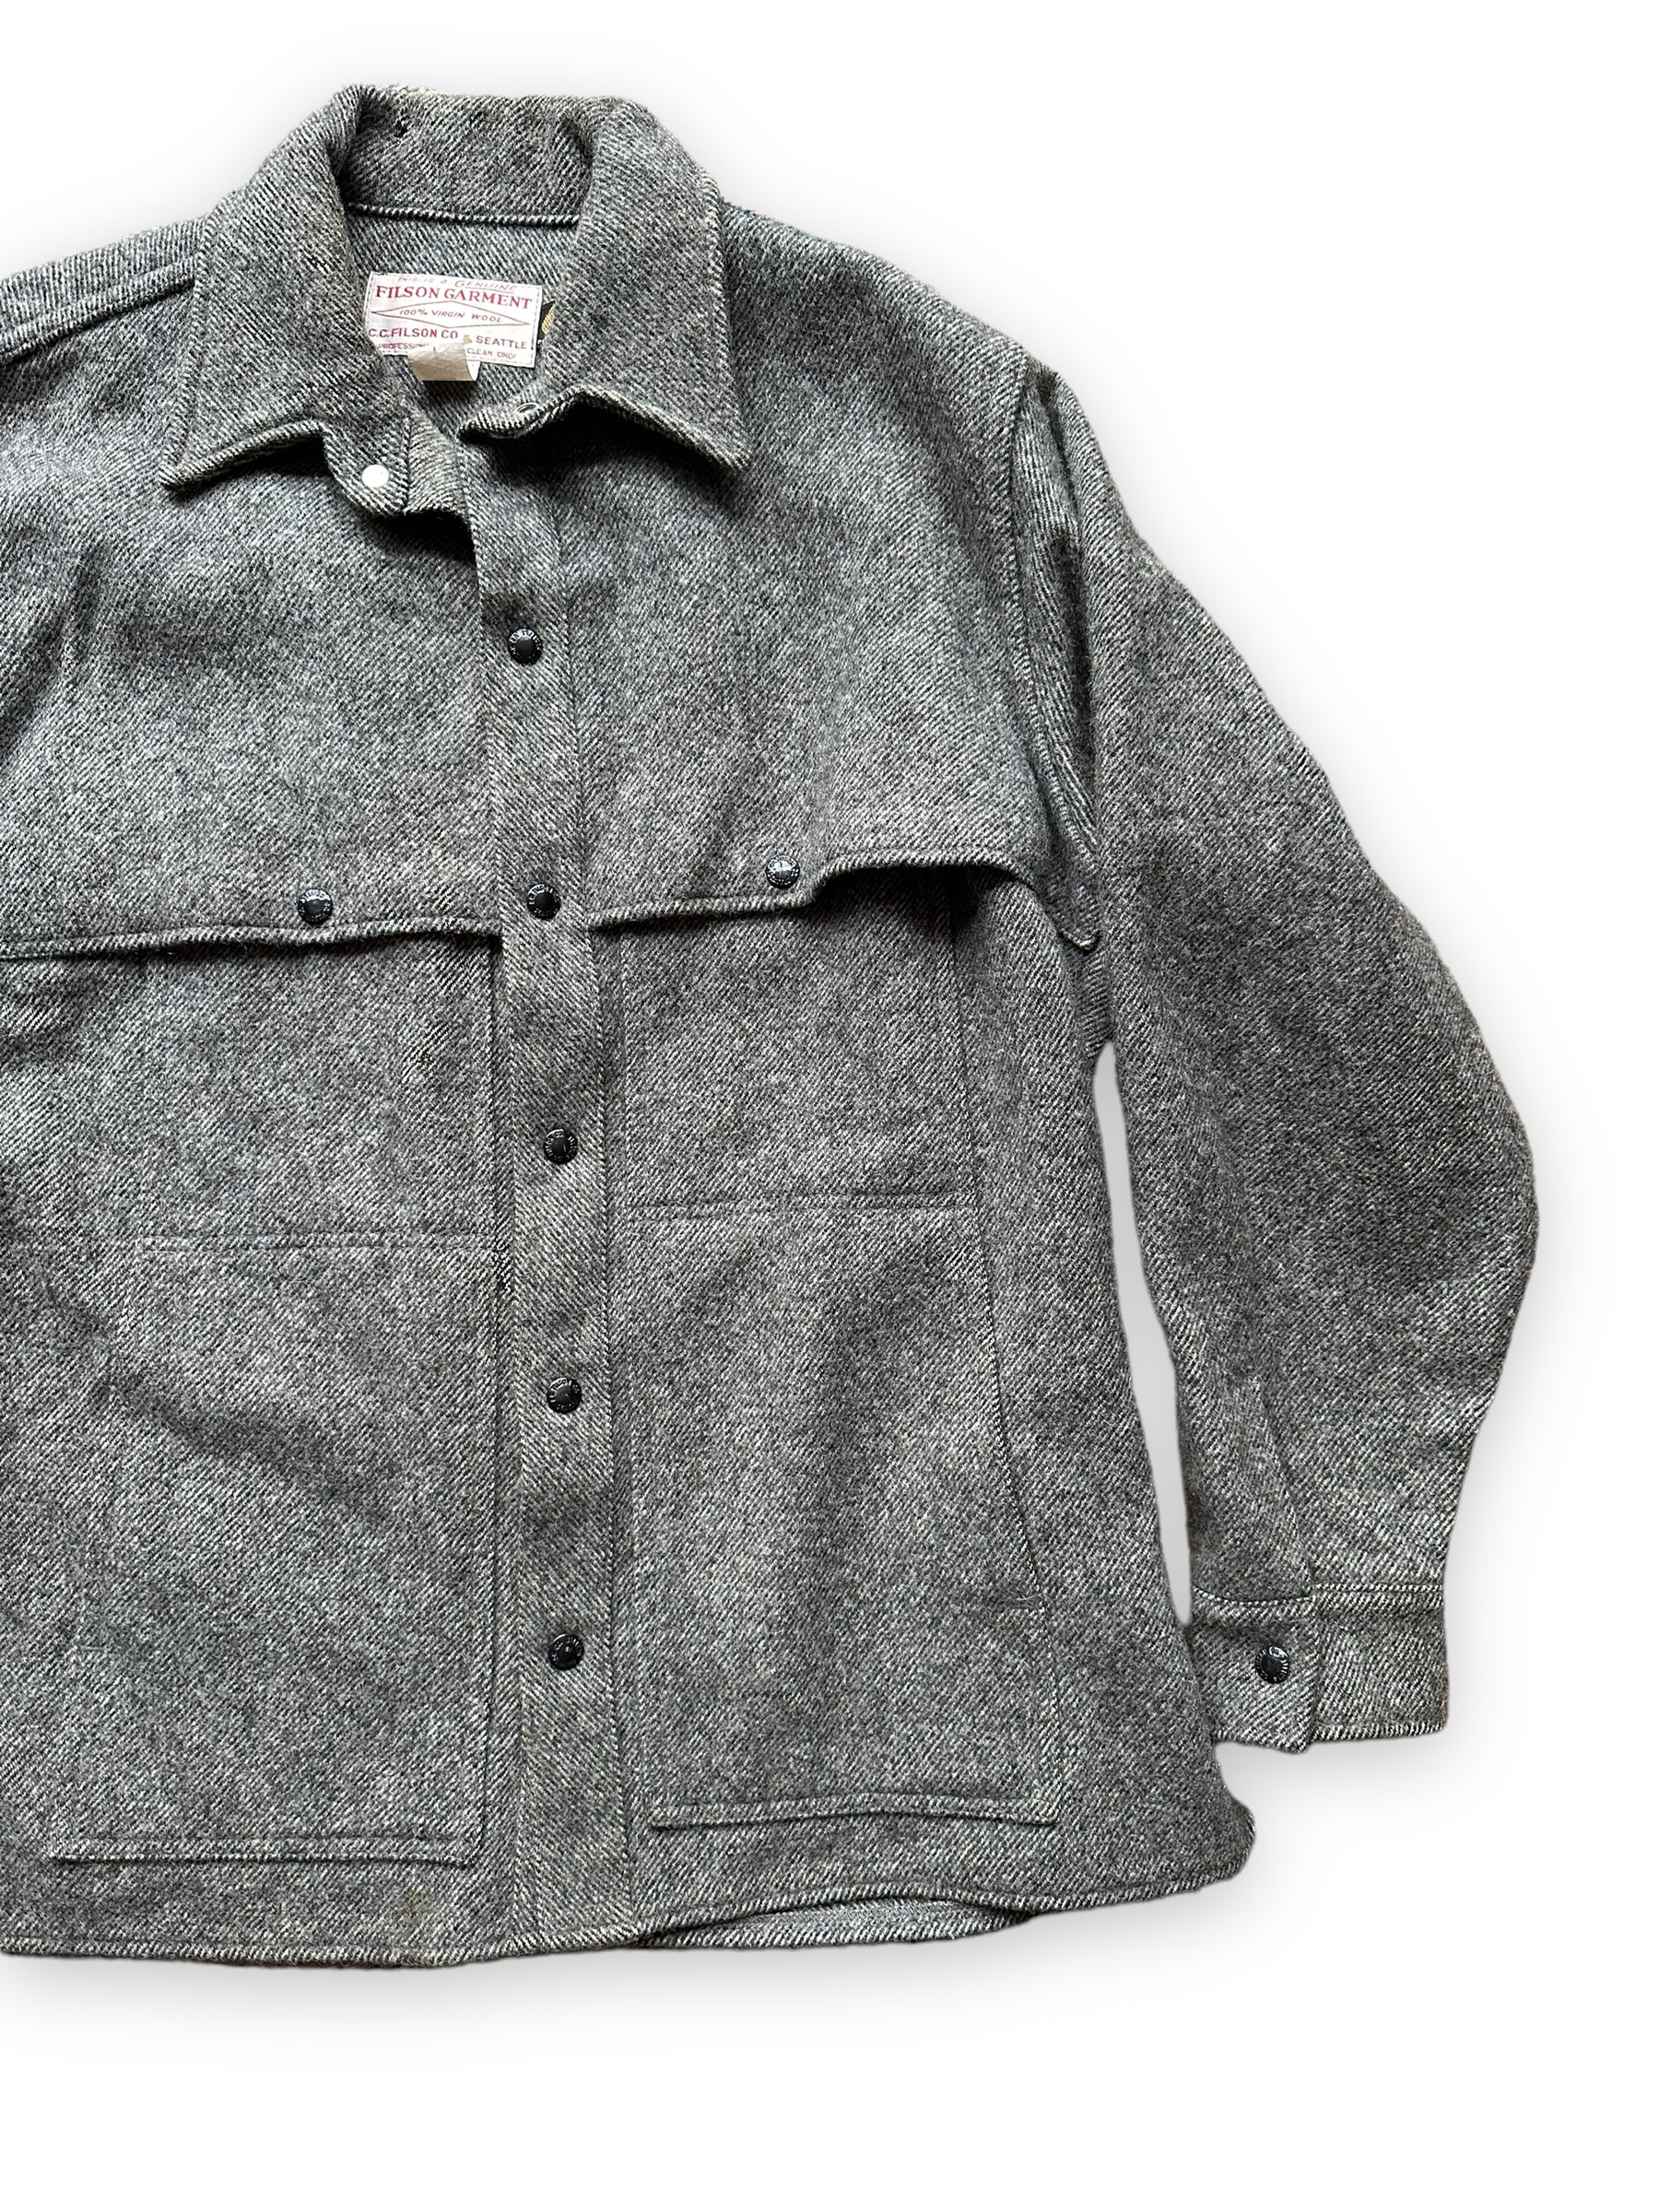 Front Left View on Vintage Filson Grey Herringbone Cape Coat SZ Large  |  Barn Owl Vintage Goods | Vintage Wool Workwear Seattle